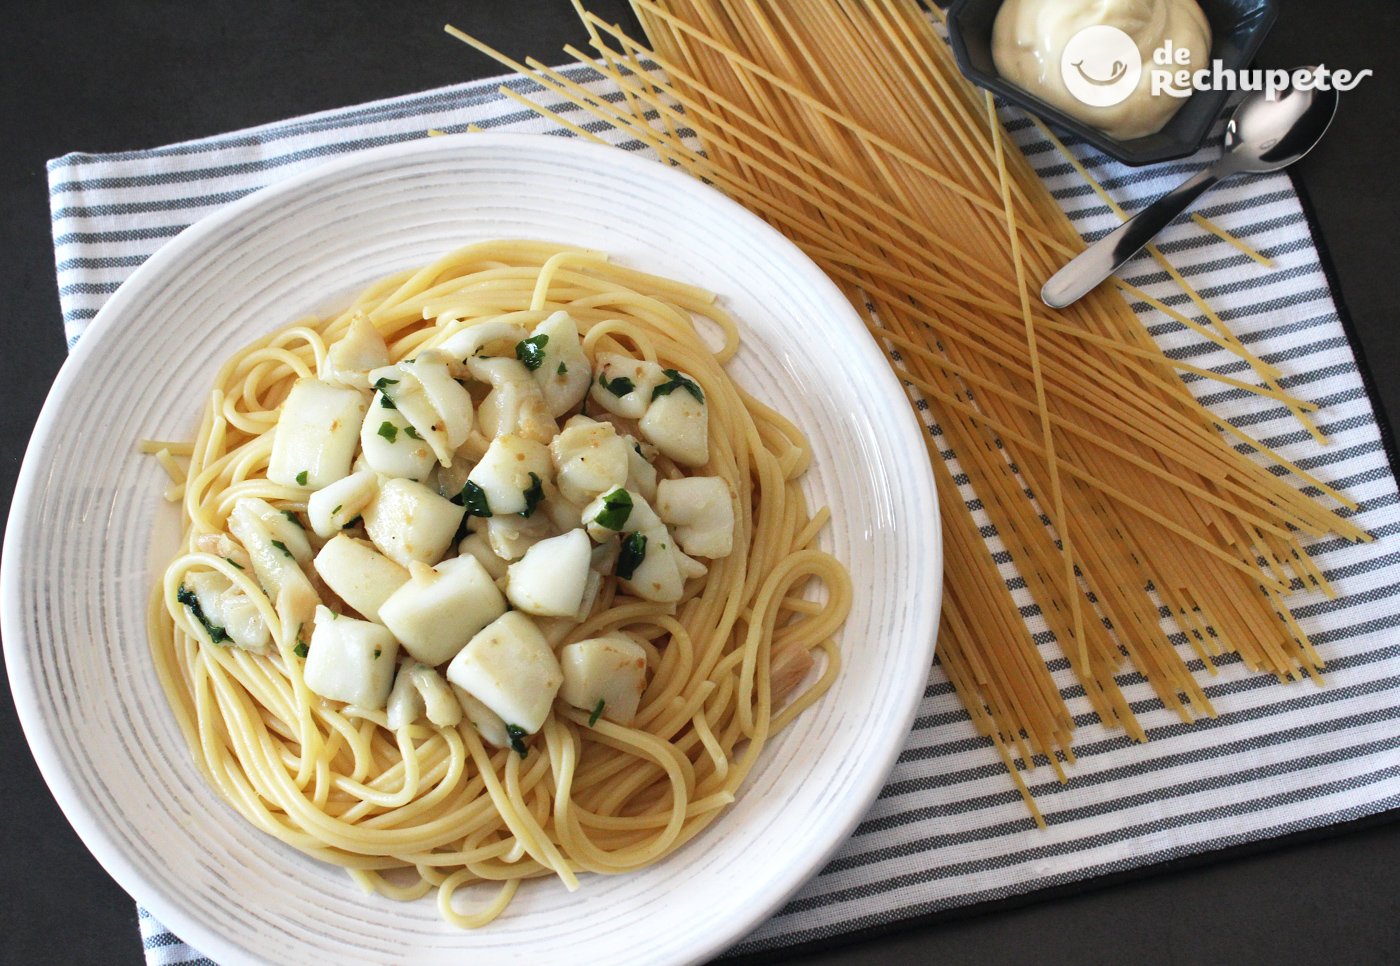 cobertura Bangladesh Encommium Espaguetis con sepia al ajillo. Receta de pasta fácil - Recetas de rechupete